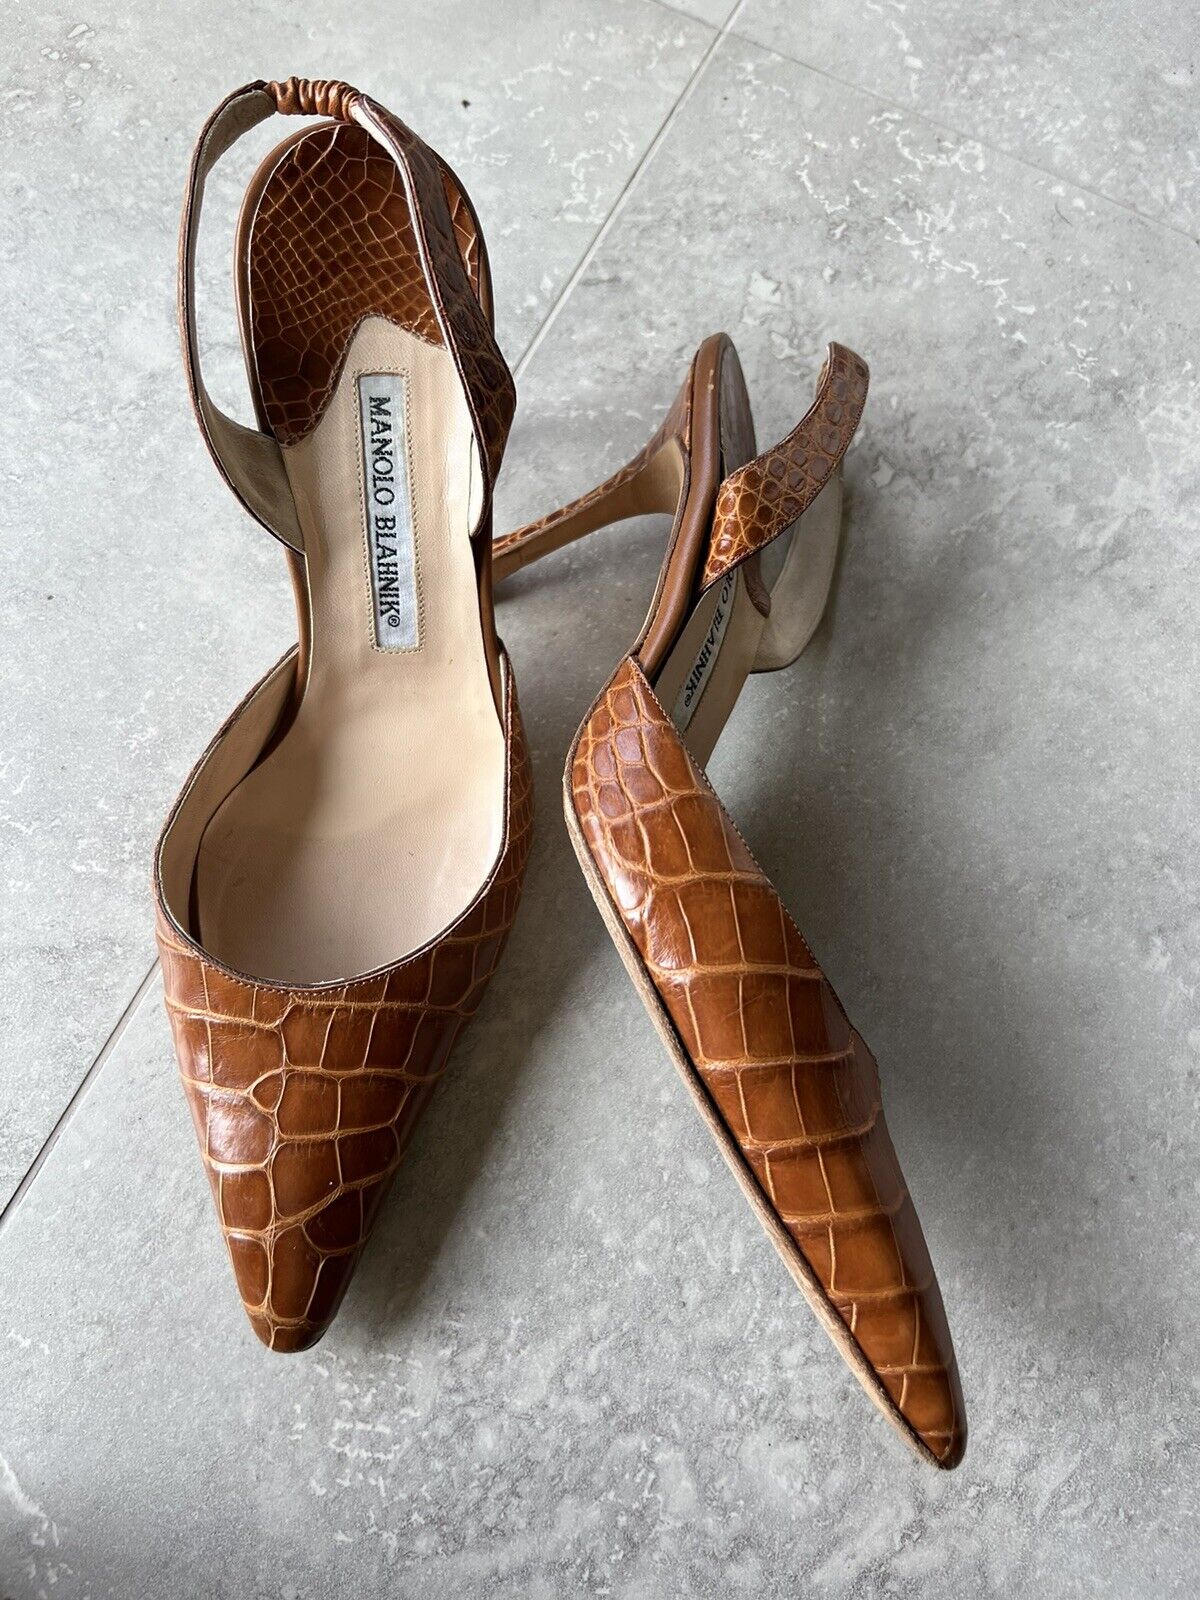 Manolo Blahnik Alligator Crocodile Shoes Heels size 38.5 - 8.5